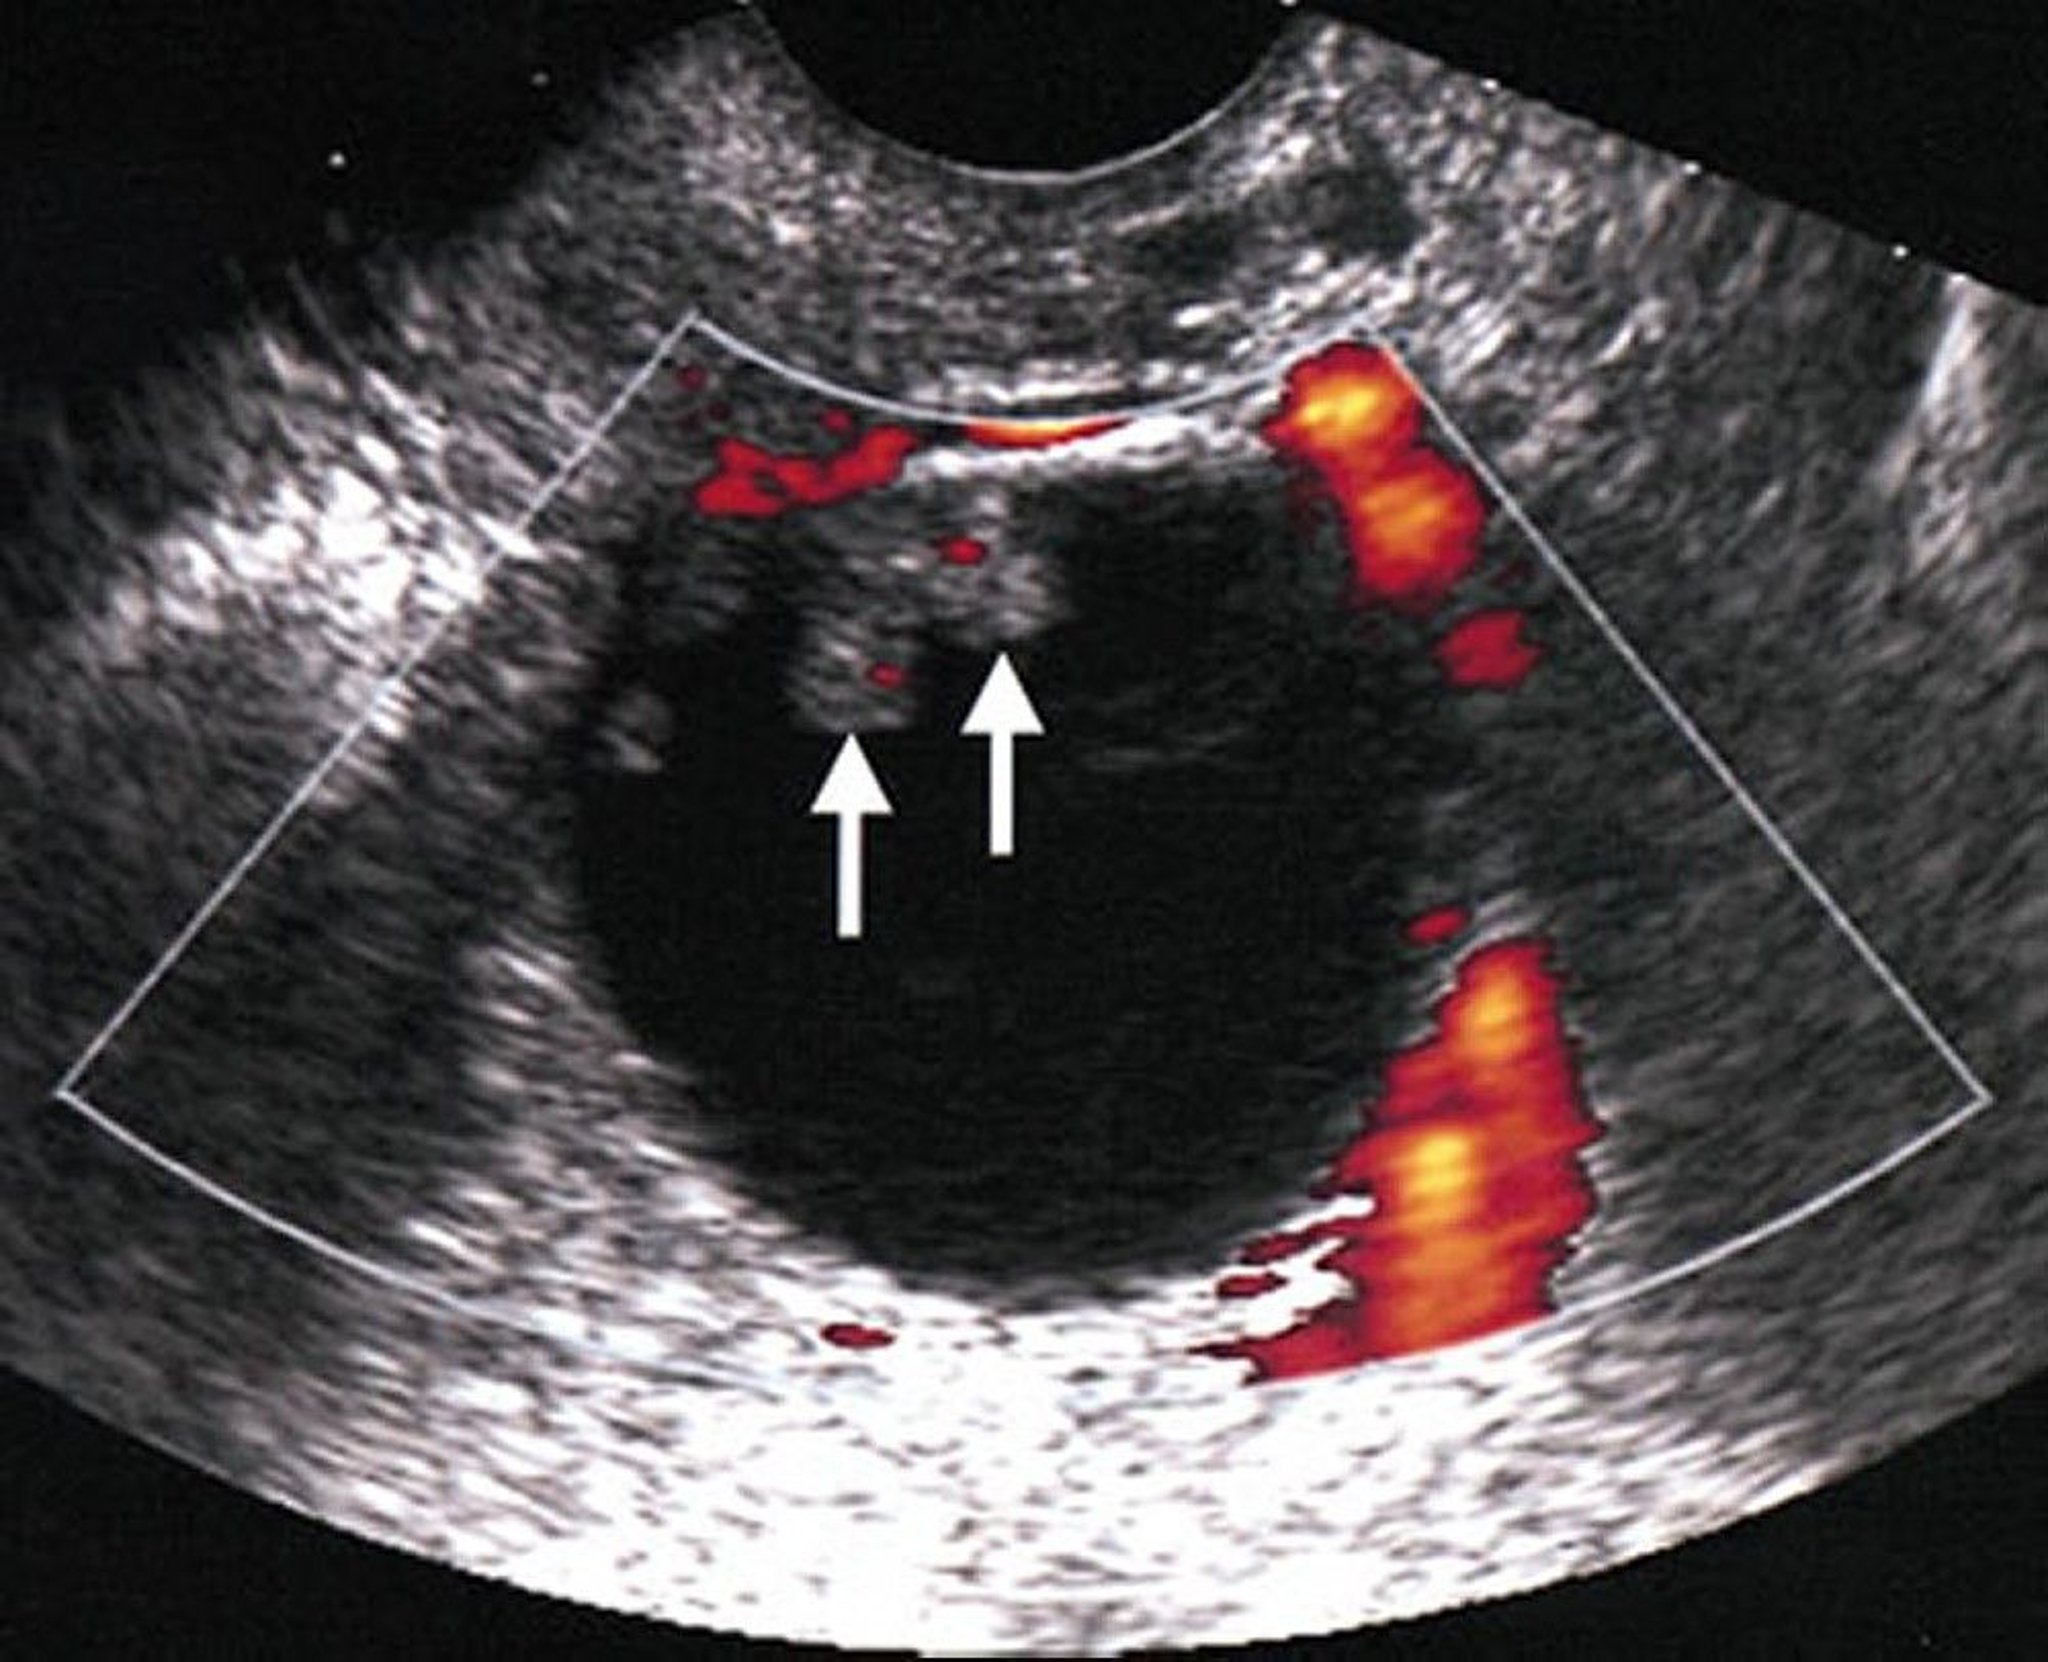 Ultrasound of a Malignant Ovarian Mass